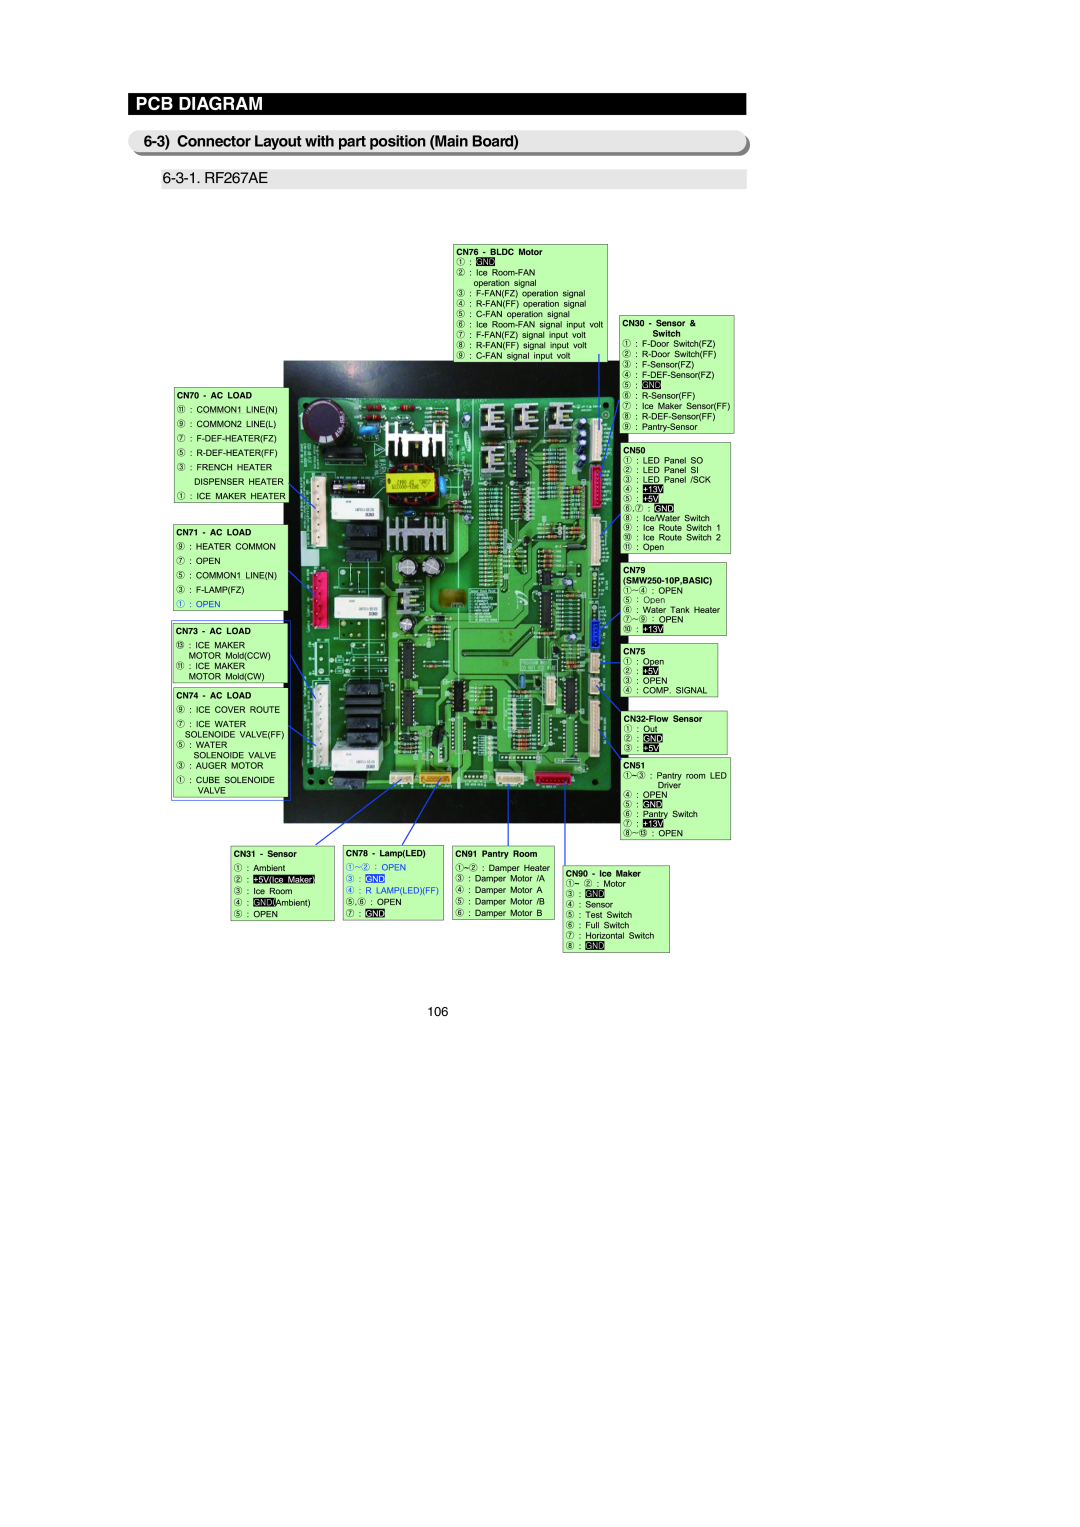 Samsung RF267AEWP, RF267AEBP, RF267AE** Pcb Diagram, Connector Layout with part position Main Board, 6-3-1. RF267AE 